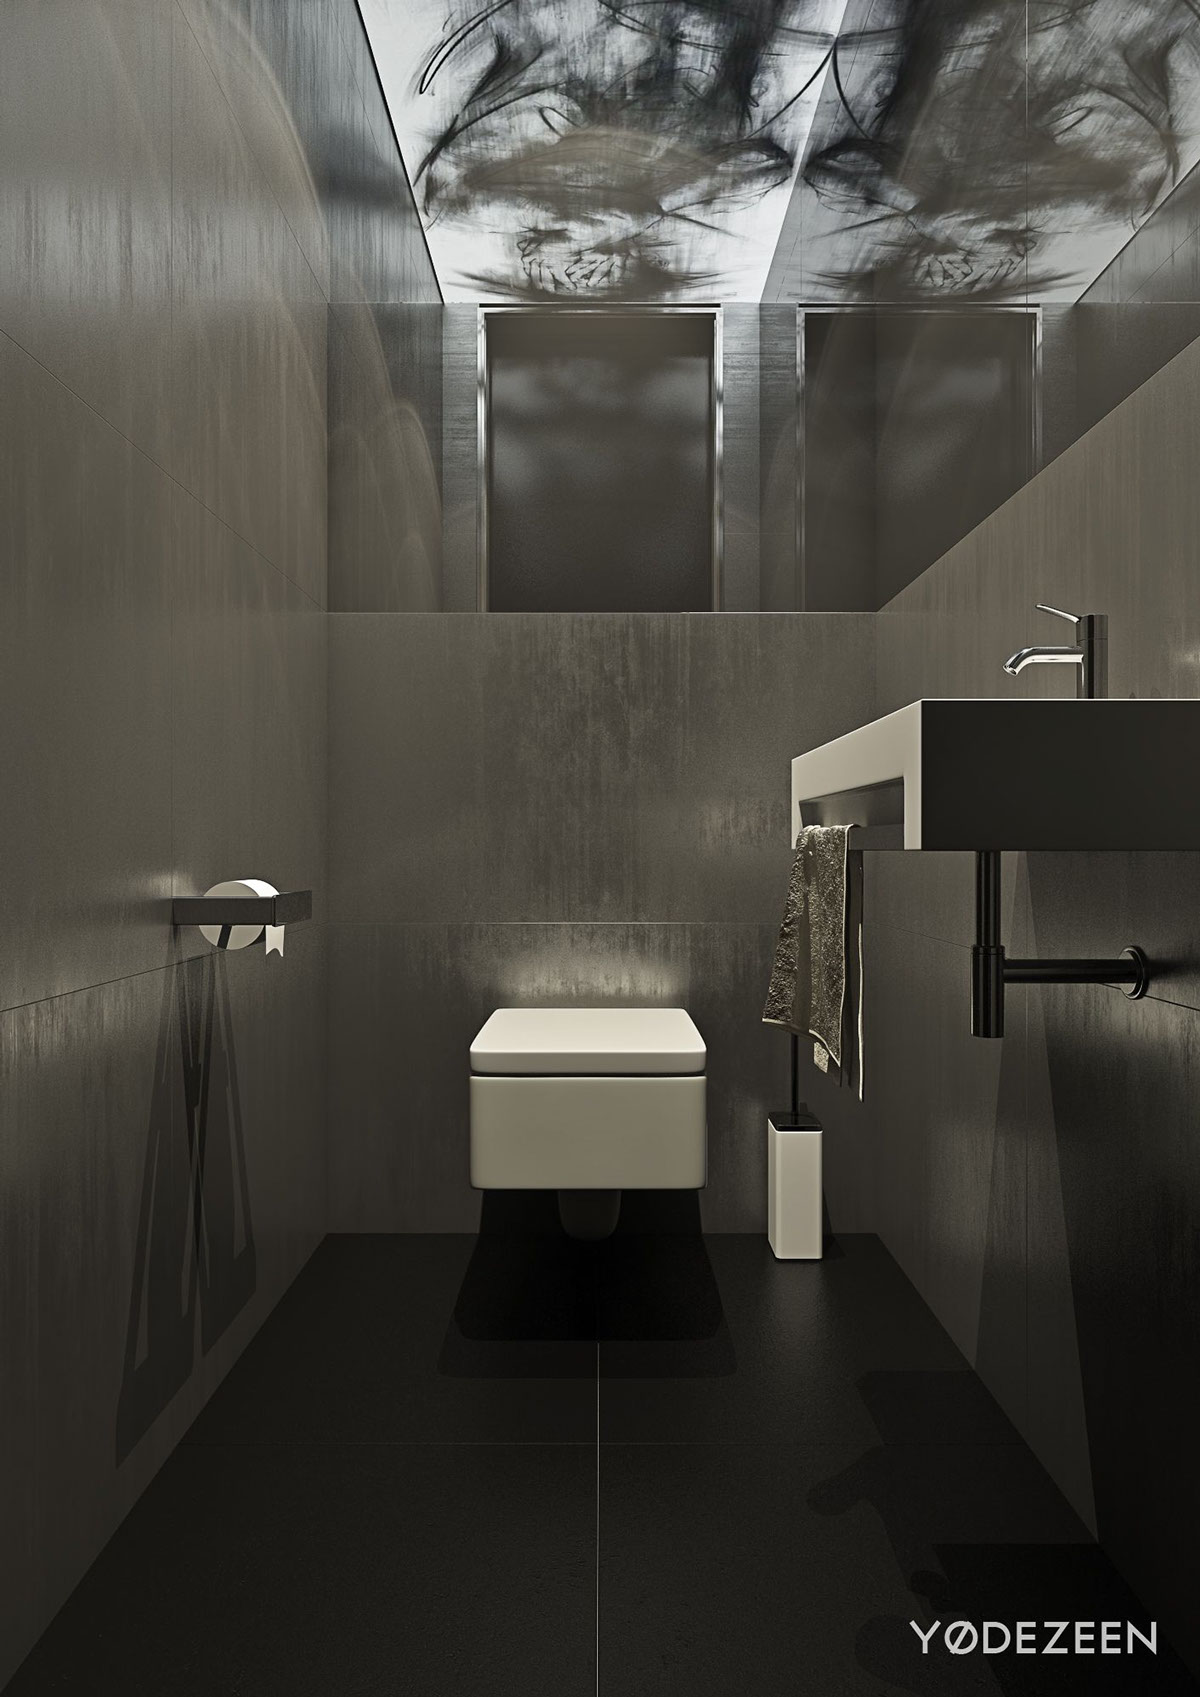 gray modern bathroom design "width =" 1200 "height =" 1697 "srcset =" https://mileray.com/wp-content/uploads/2020/05/1588516300_343_Contemporary-Bathroom-Decor-Ideas-Combined-With-Wooden-Accents-Become-a.jpg 1200w, https://mileray.com / wp-content / uploads / 2016/09 / Yo-Dezeen-212x300.jpg 212w, https://mileray.com/wp-content/uploads/2016/09/Yo-Dezeen-768x1086.jpg 768w, https: / / mileray.com/wp-content/uploads/2016/09/Yo-Dezeen-724x1024.jpg 724w, https://mileray.com/wp-content/uploads/2016/09/Yo-Dezeen-696x984.jpg 696w, https://mileray.com/wp-content/uploads/2016/09/Yo-Dezeen-1068x1510.jpg 1068w, https://mileray.com/wp-content/uploads/2016/09/Yo-Dezeen- 297x420 .jpg 297w "sizes =" (maximum width: 1200px) 100vw, 1200px